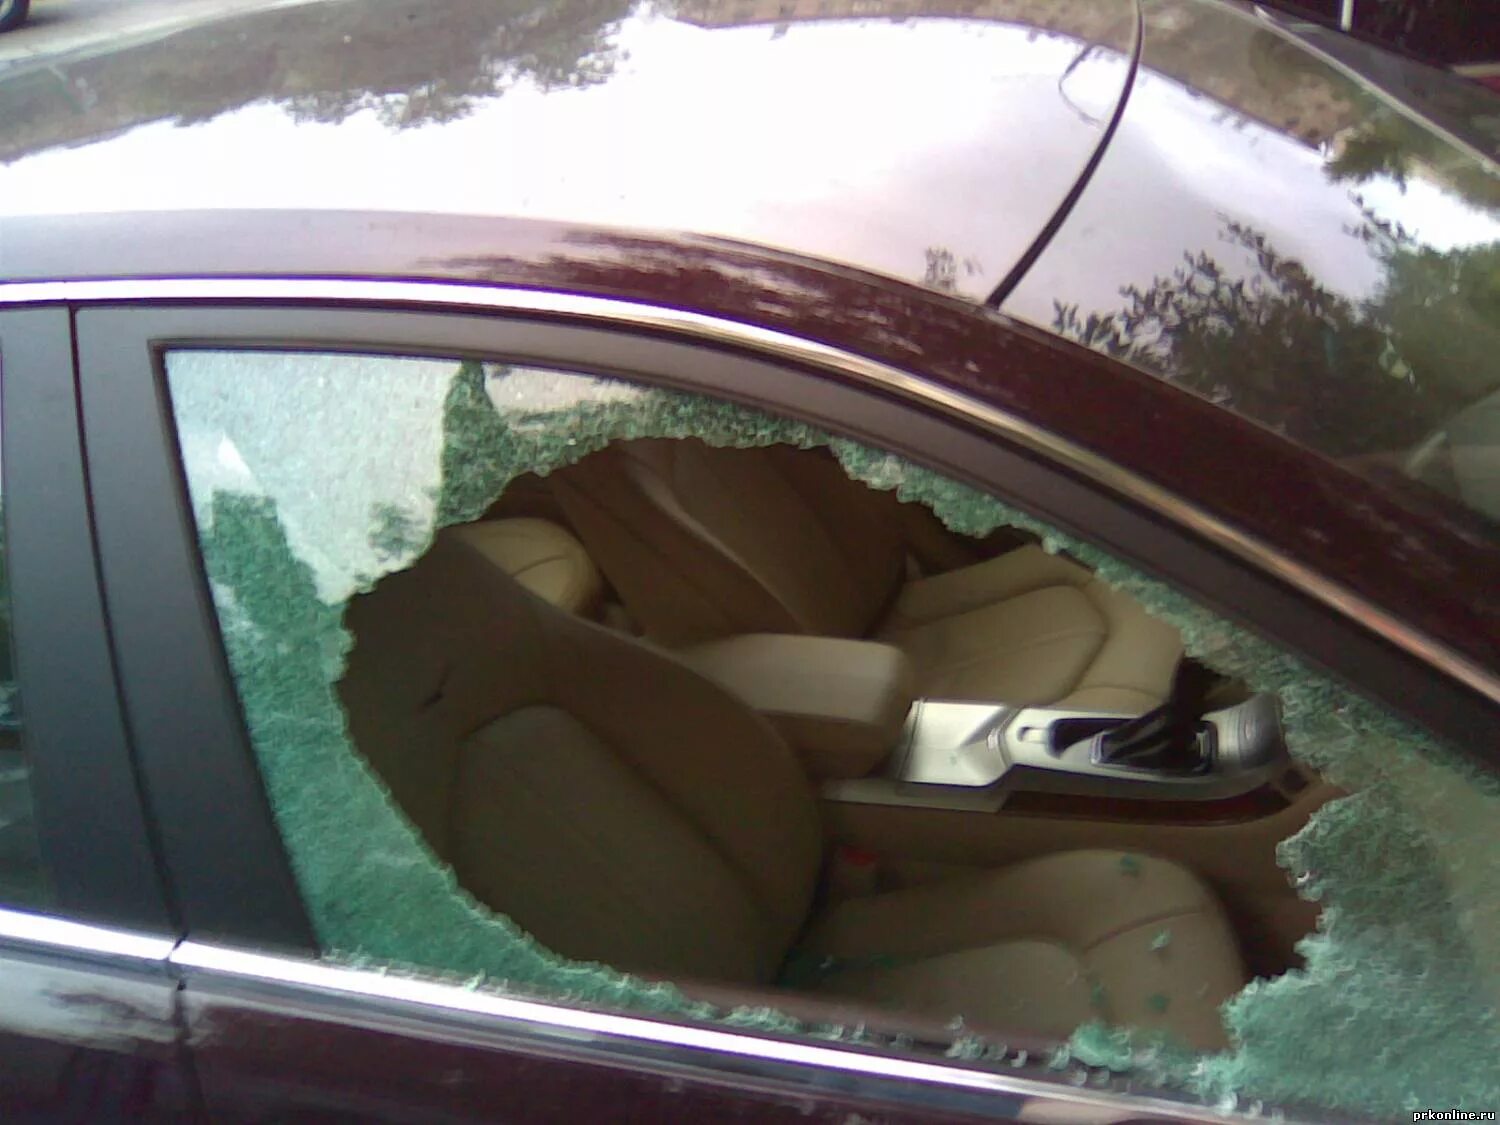 Разбиты окна машин. Разбили стекло в машине. Разбитое окно машины. Разбить окно автомобиля. Разбитое боковое стекло.